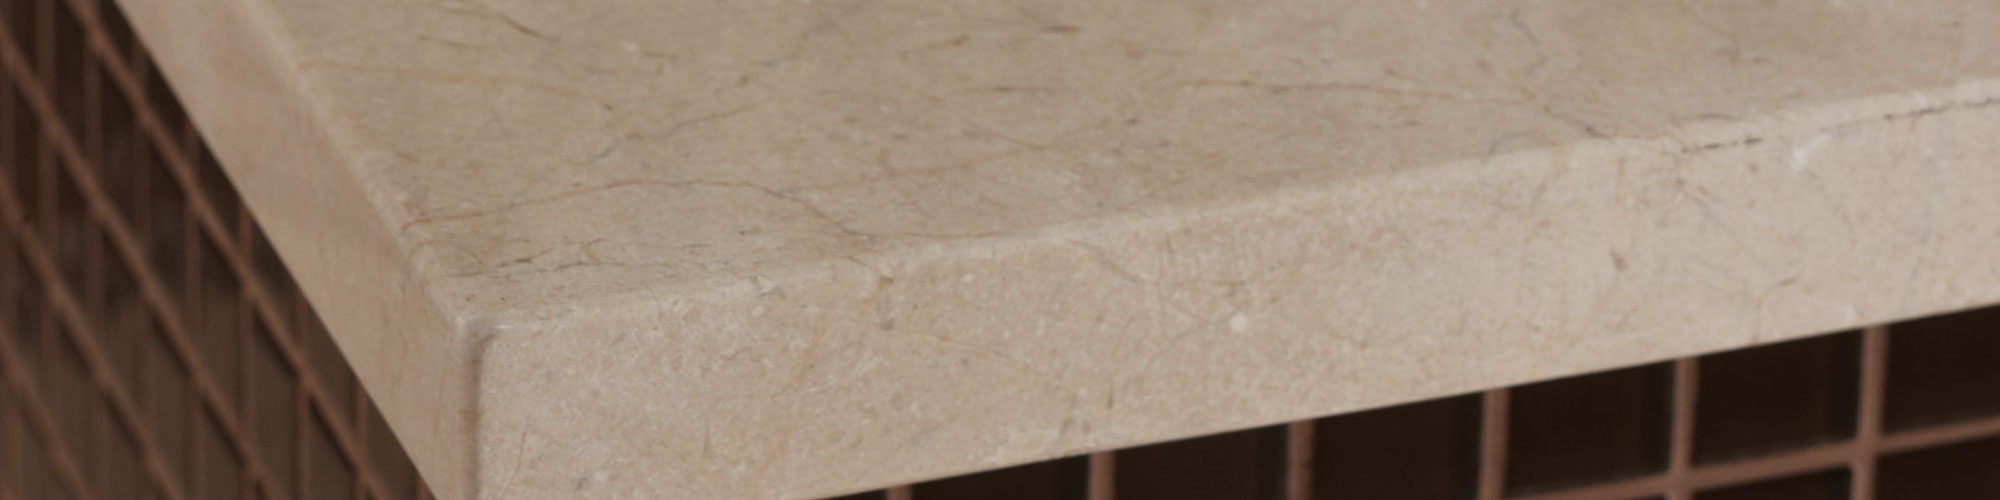 Closeup of brown marble countertop.